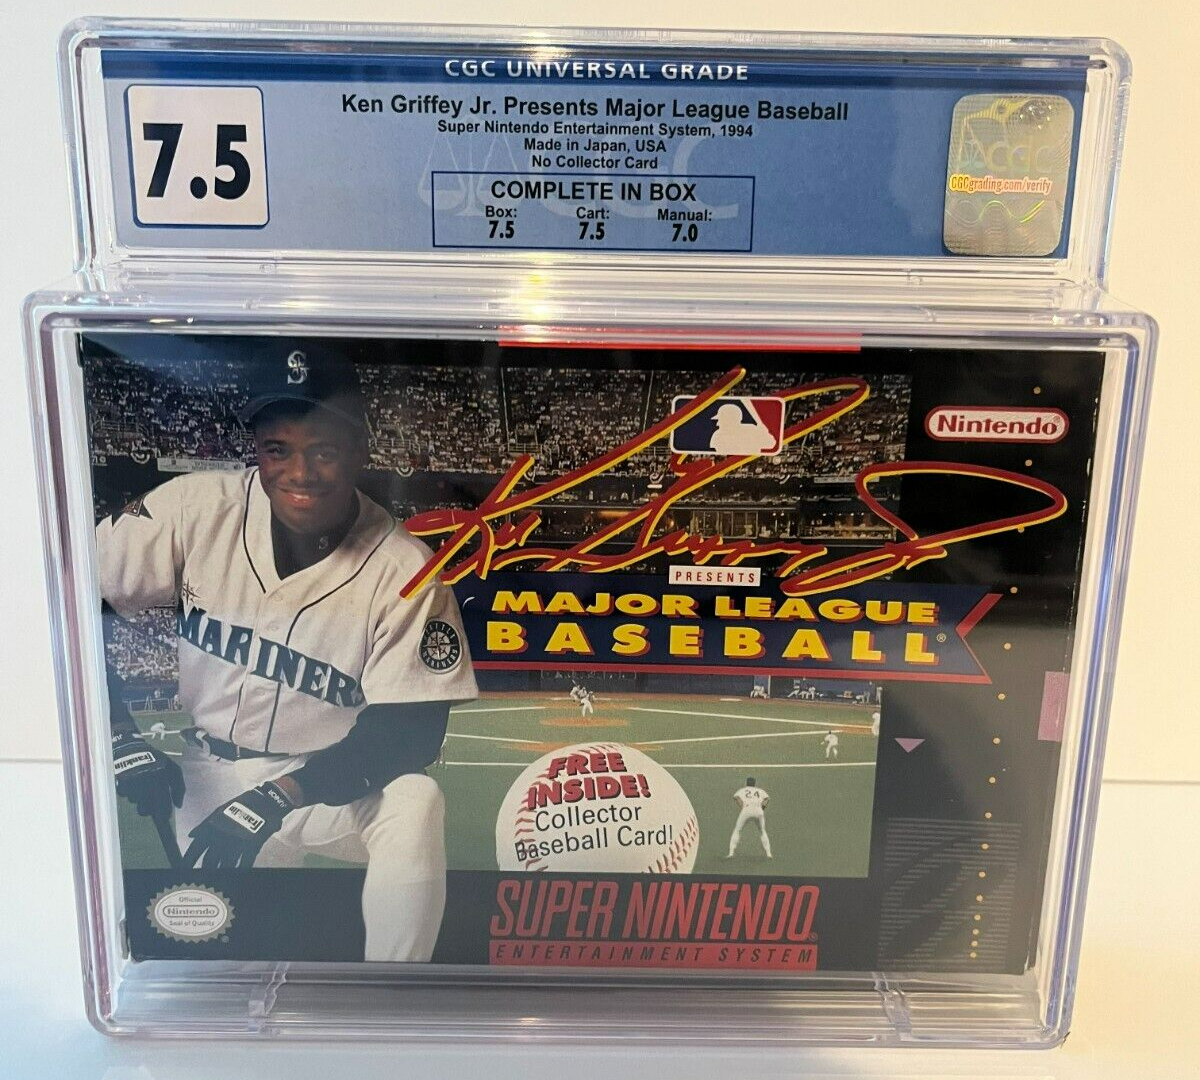 Ken Griffey Jr Presents Major League Baseball SNES(1995) Complete in Box CGC 7.5 - 643-collectibles